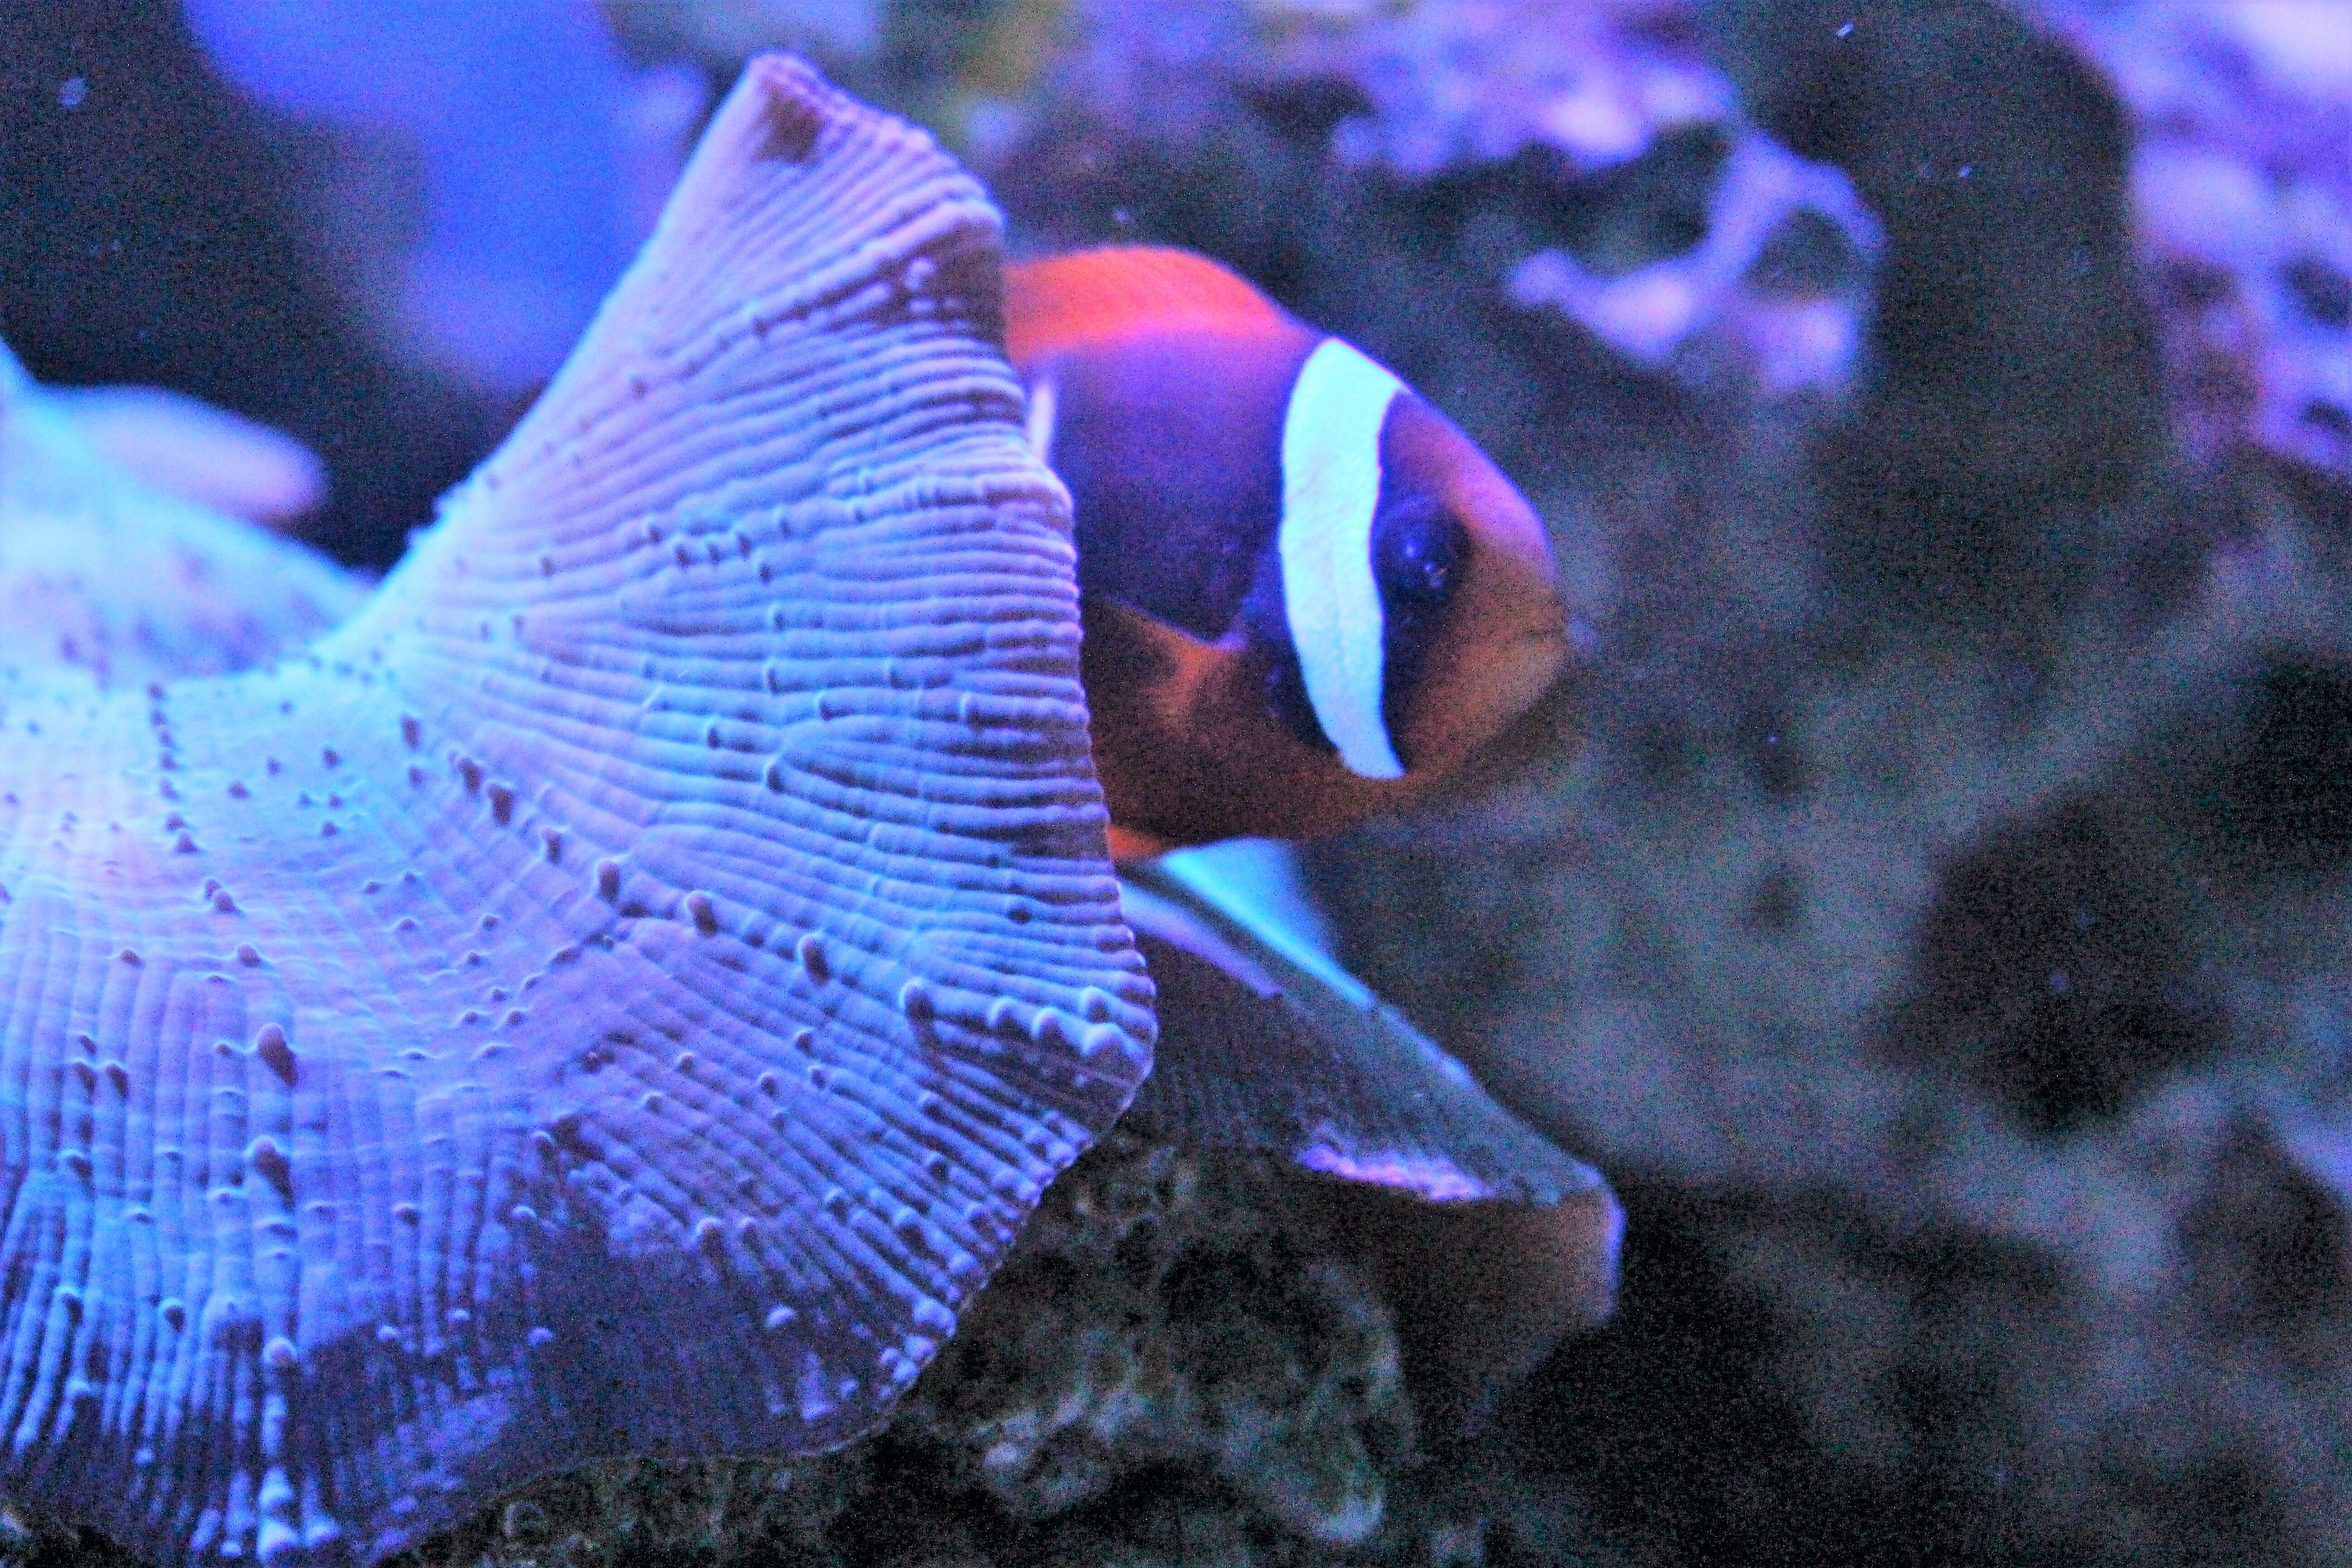 Image of Orange-fin anemonefish